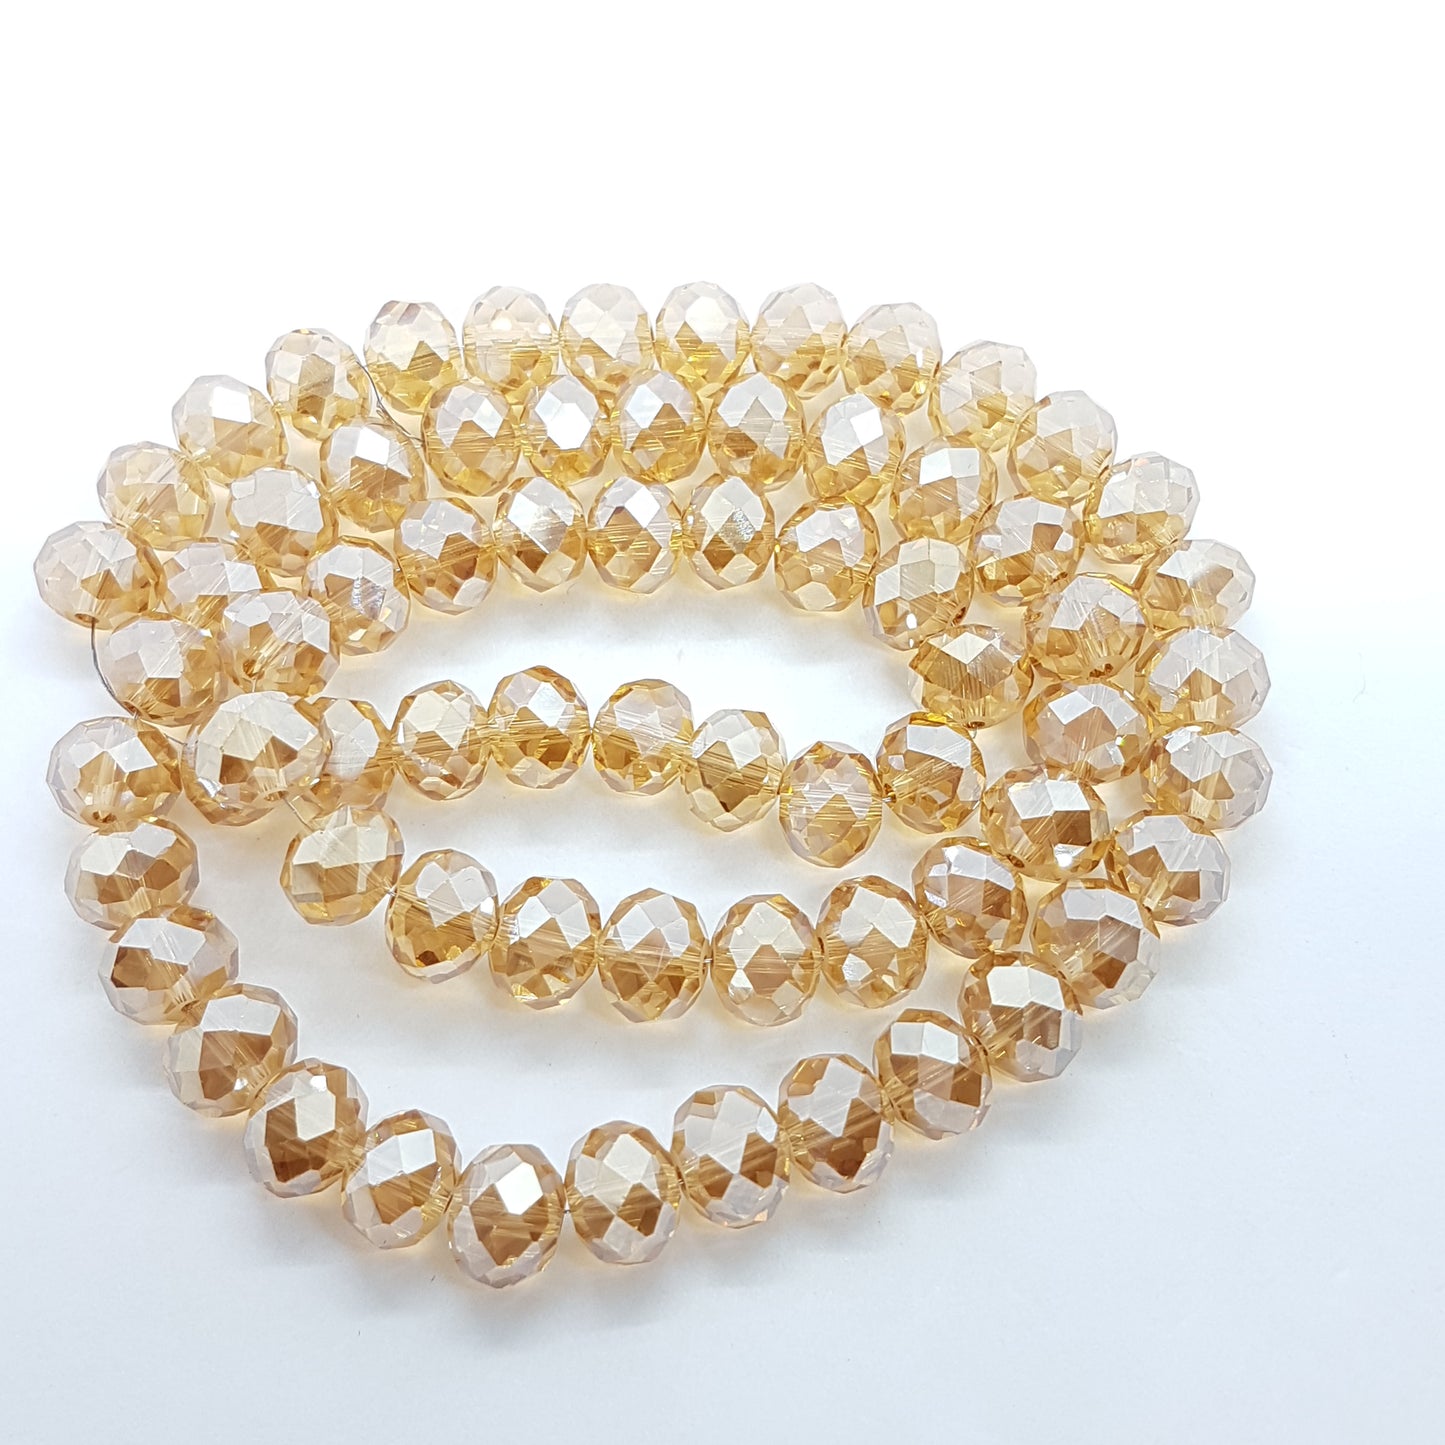 Large Golden Crystal Rondelle Beads